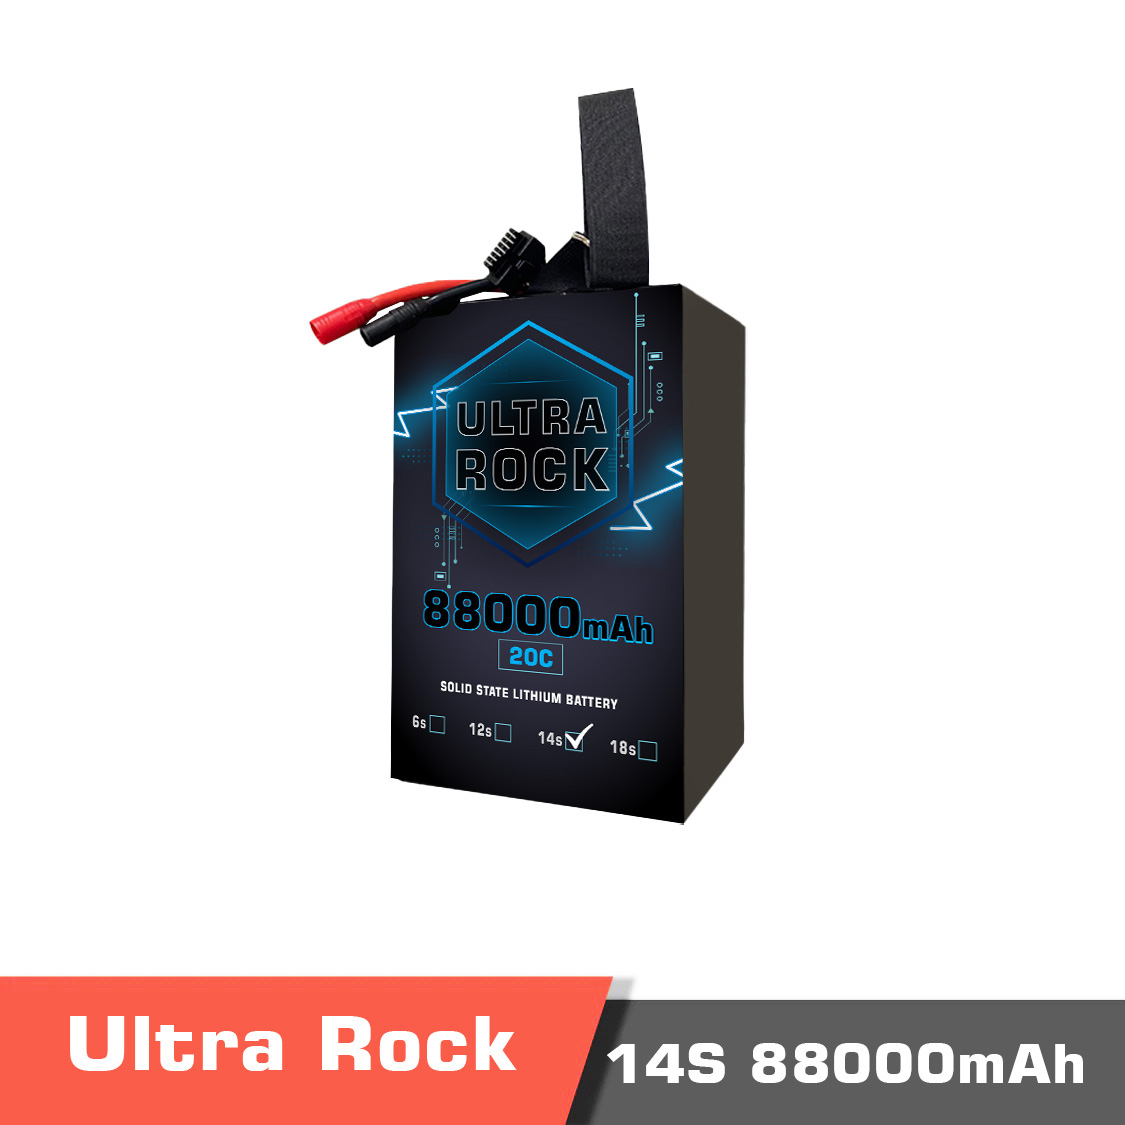 88000 14s temp - Ultra Rock Ultra HV Semi Solid-State Battery,Ultra HV Semi Solid-State Battery,12S 88000mAh high voltage LiPo Battery,12S 88000mAh HV LiPo Battery,Solid-state LiPo battery,lipo battery,drone battery,12s battery,high energy density battery,UAV,drone,vtol - MotioNew - 2